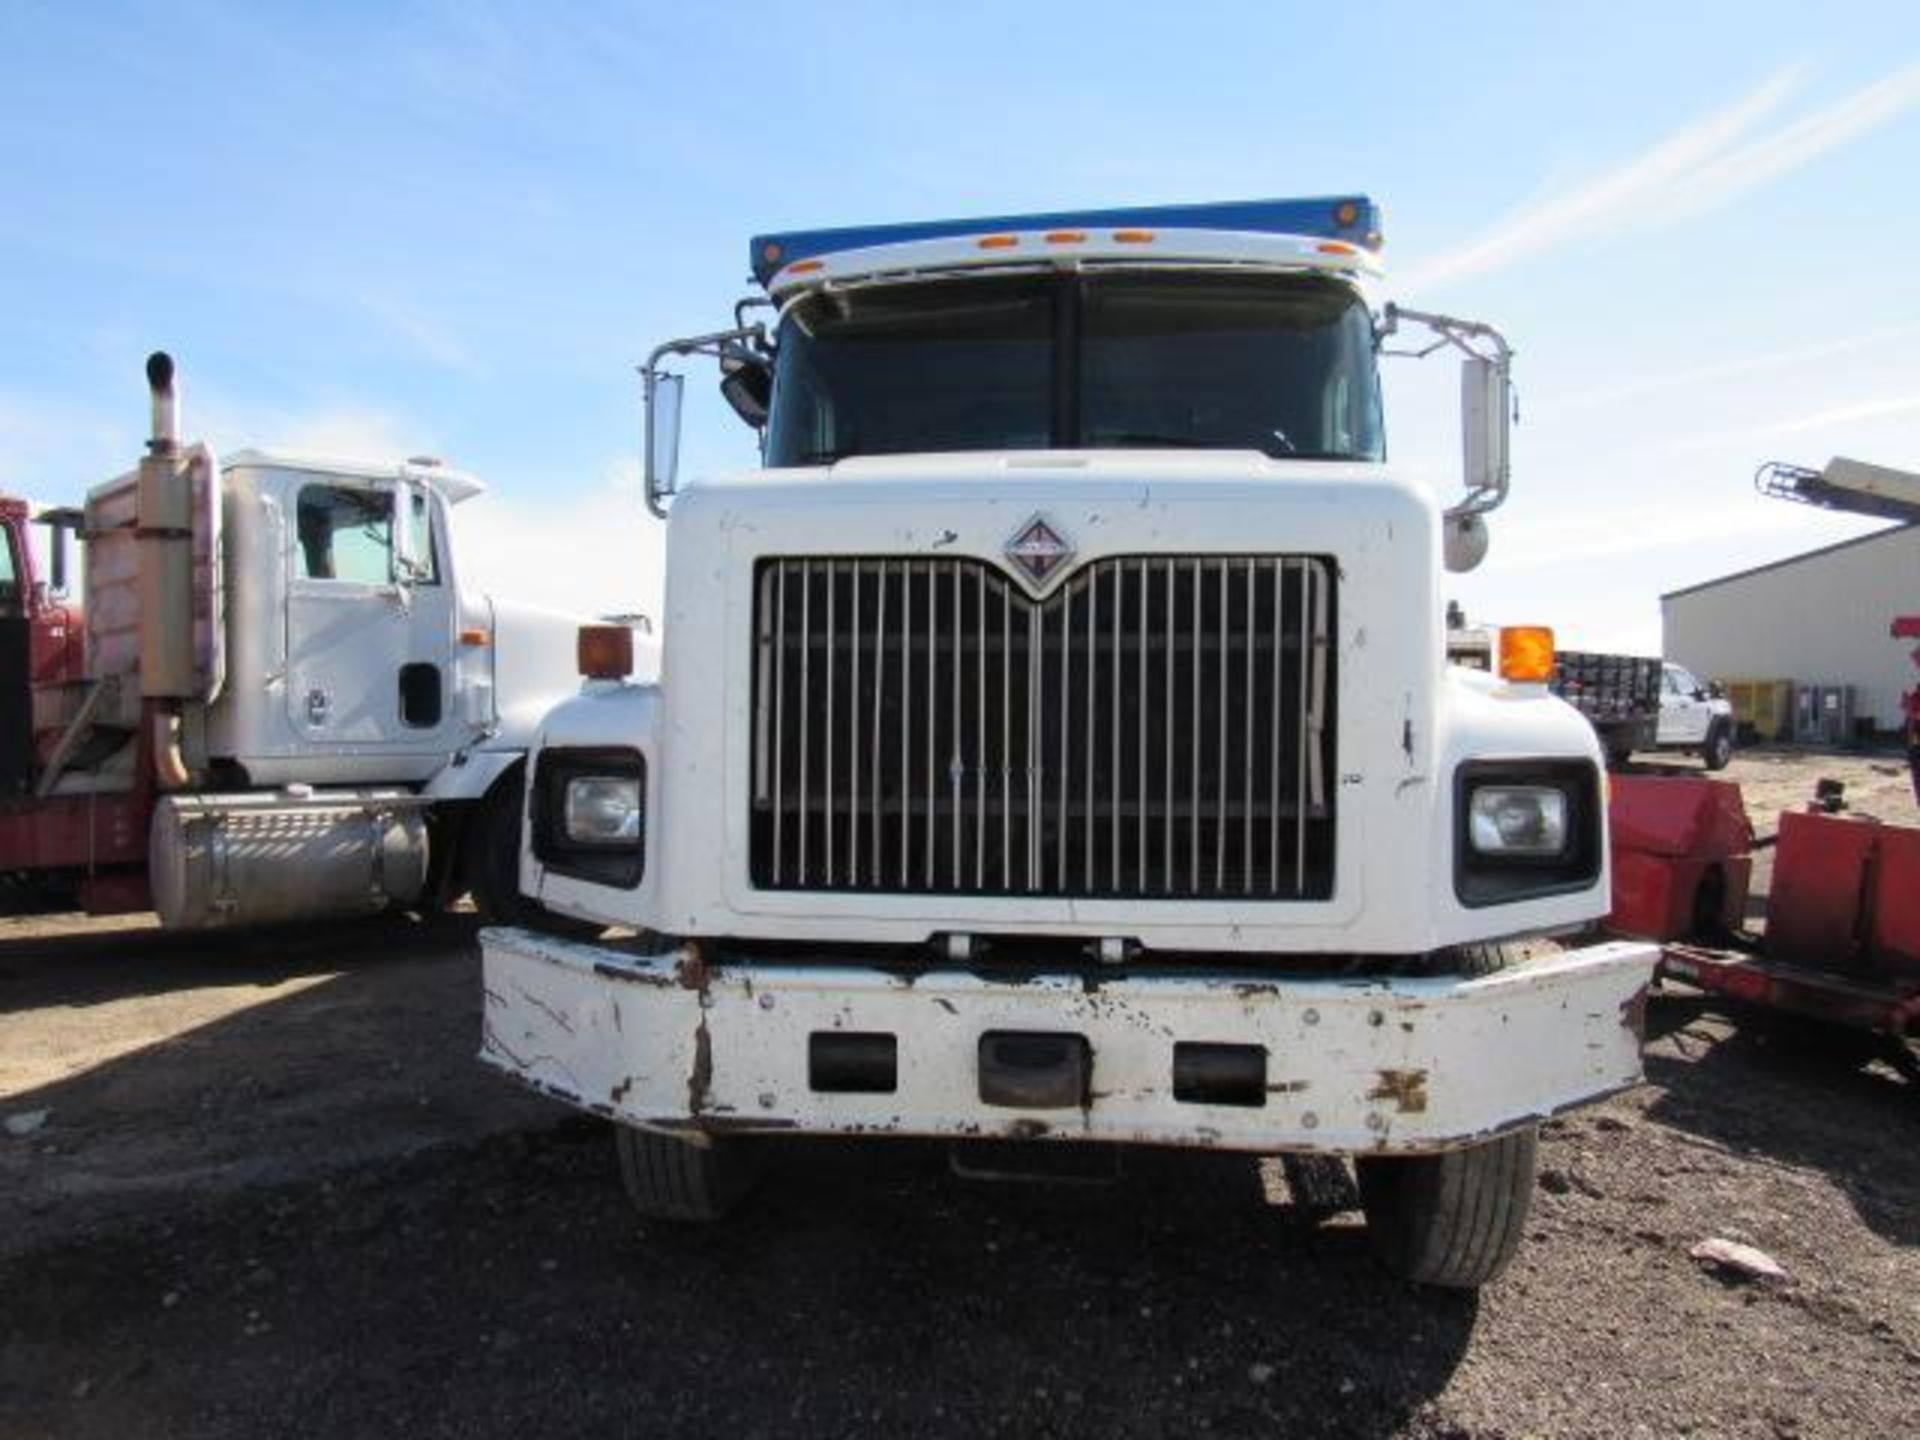 2005 International 5600 Dump Truck 6 x 4, VIN # 1HTXHAPR755031266, 18-Speed Manual Eaton Fuller - Image 2 of 9